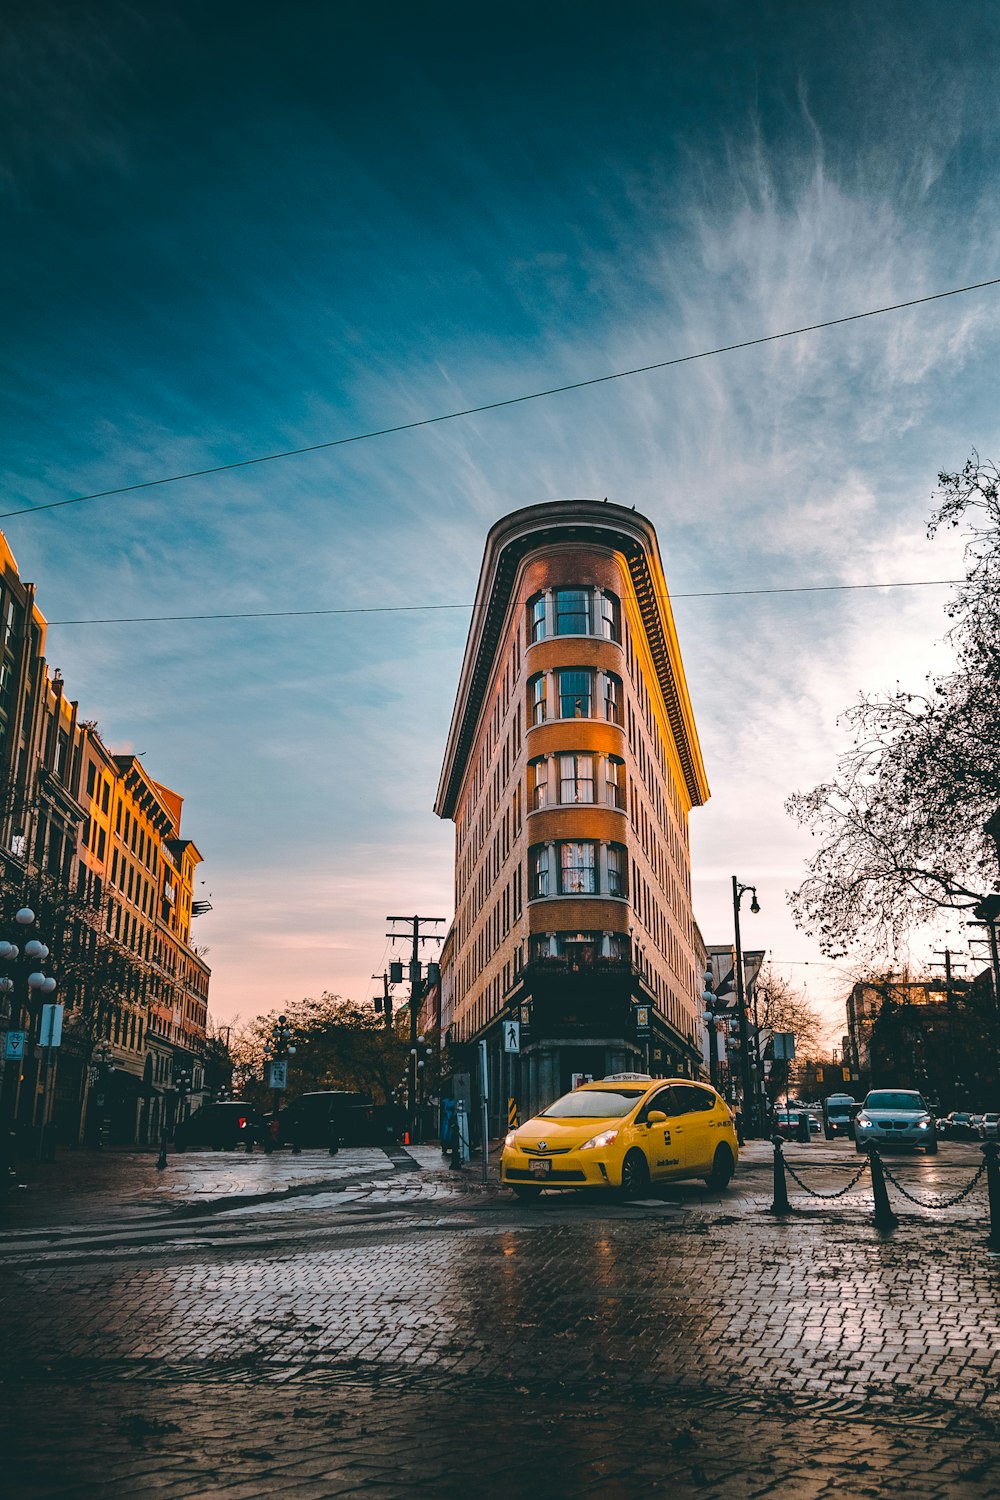 selective focus photography of yellow car